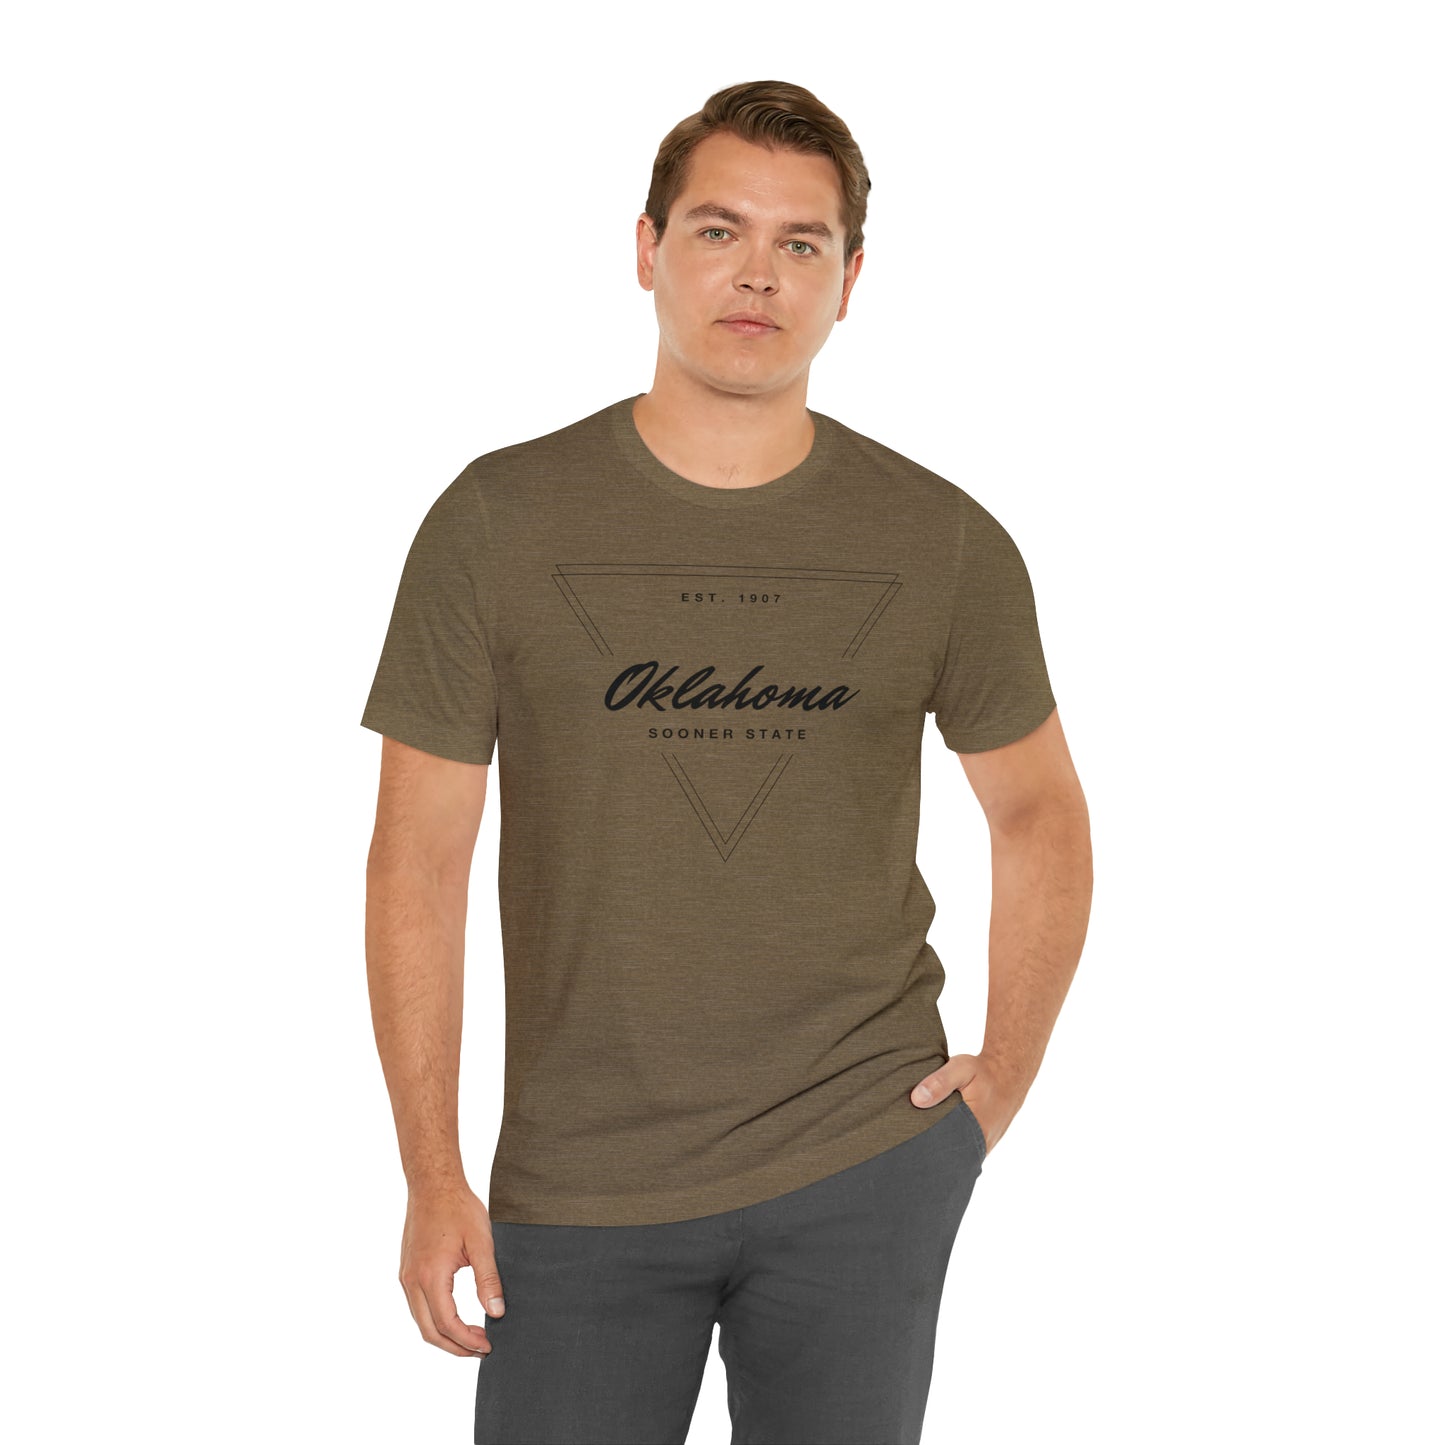 Oklahoma Geometric Shirt